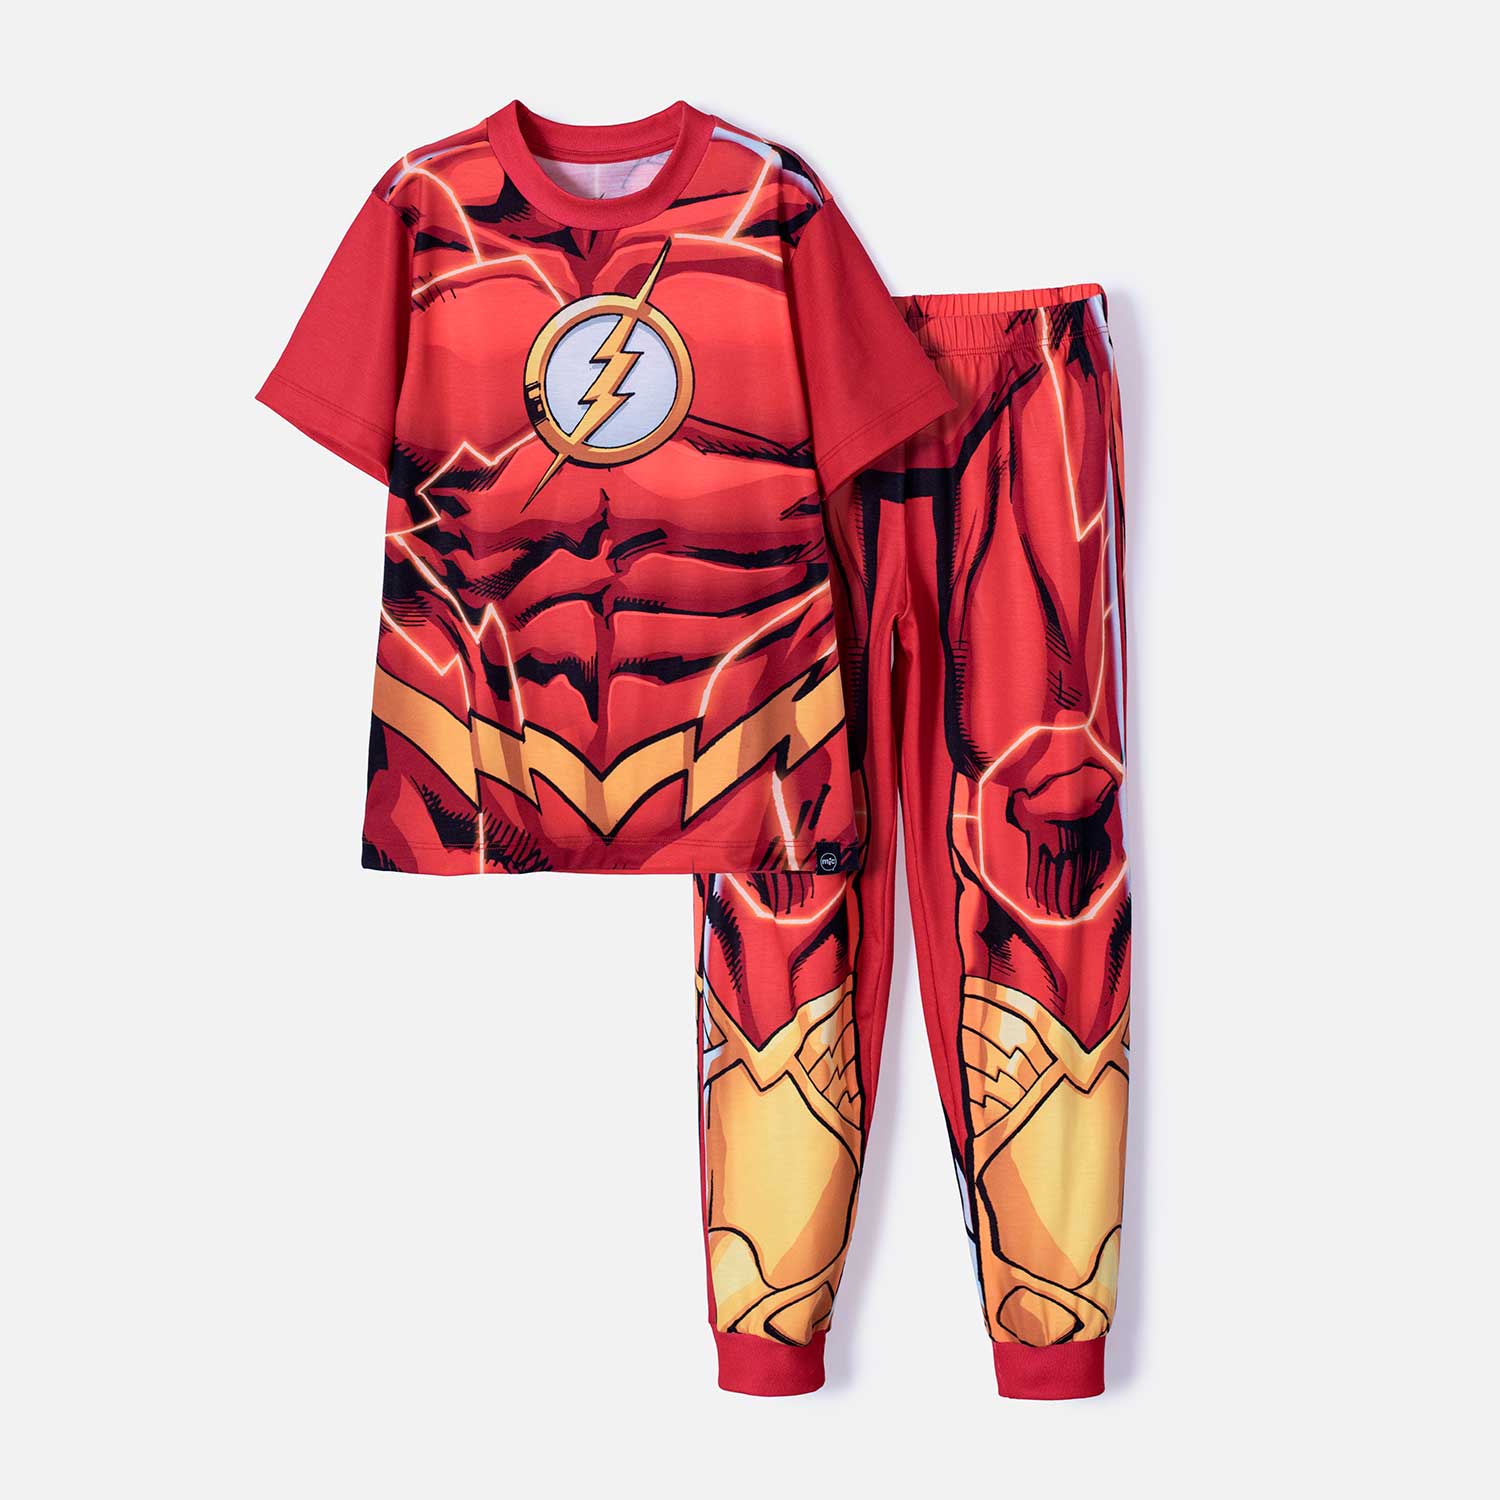 Pijama Flash roja largo niño - Tienda Online MIC